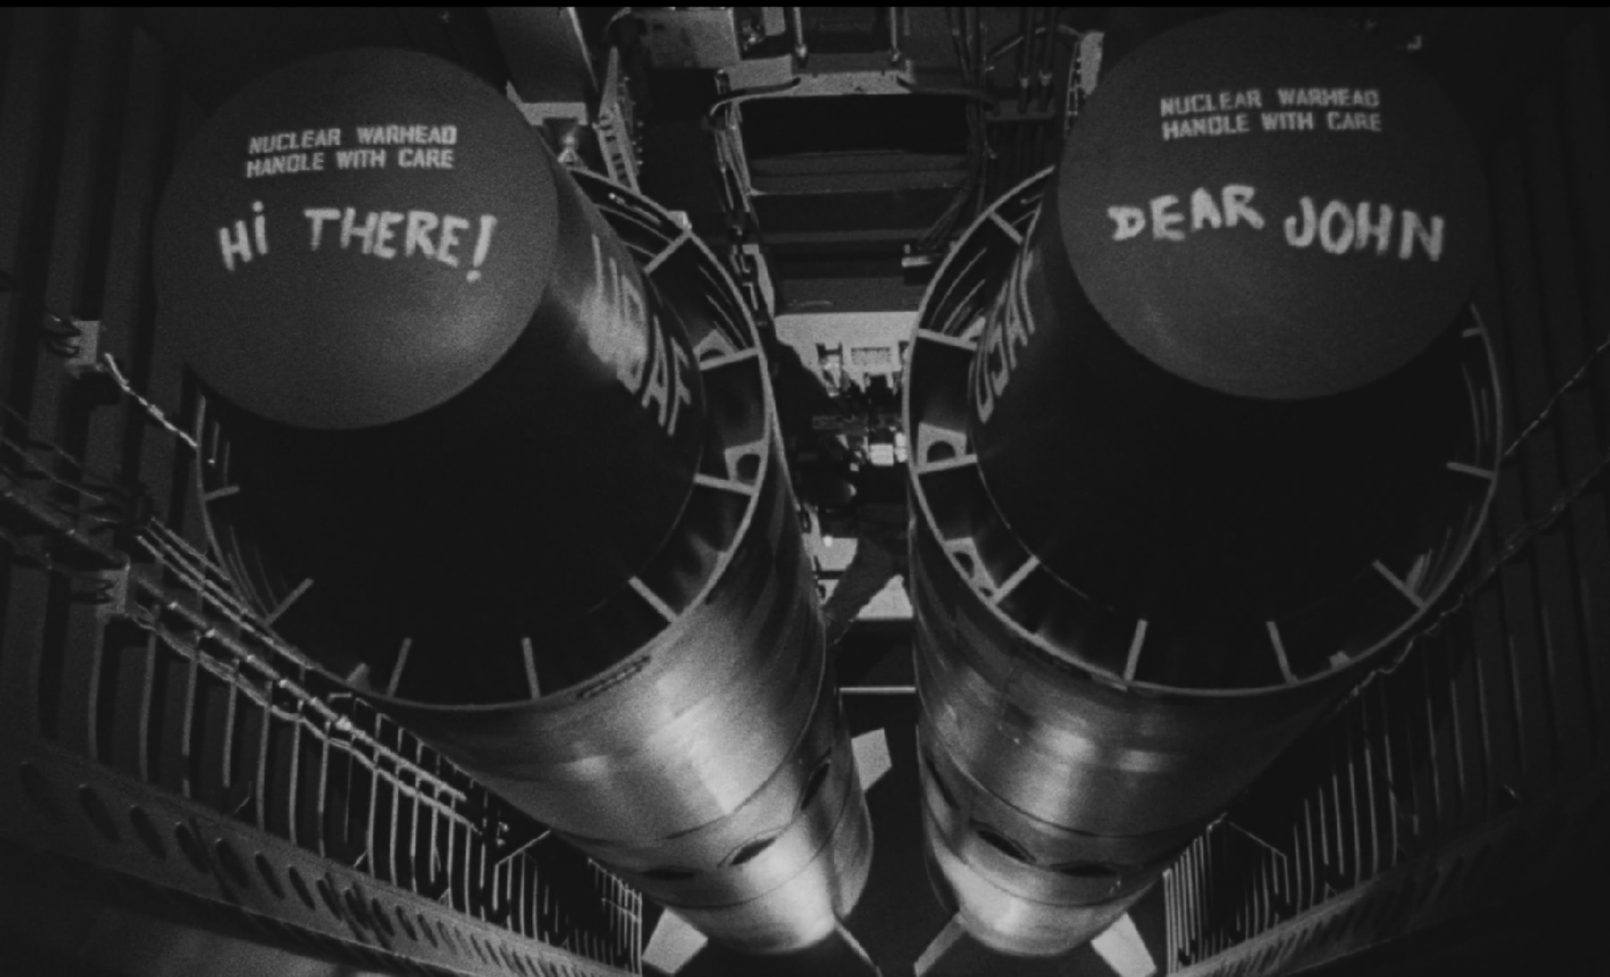 Nuclear-Warheads-Hi-There-and-Dear-John.